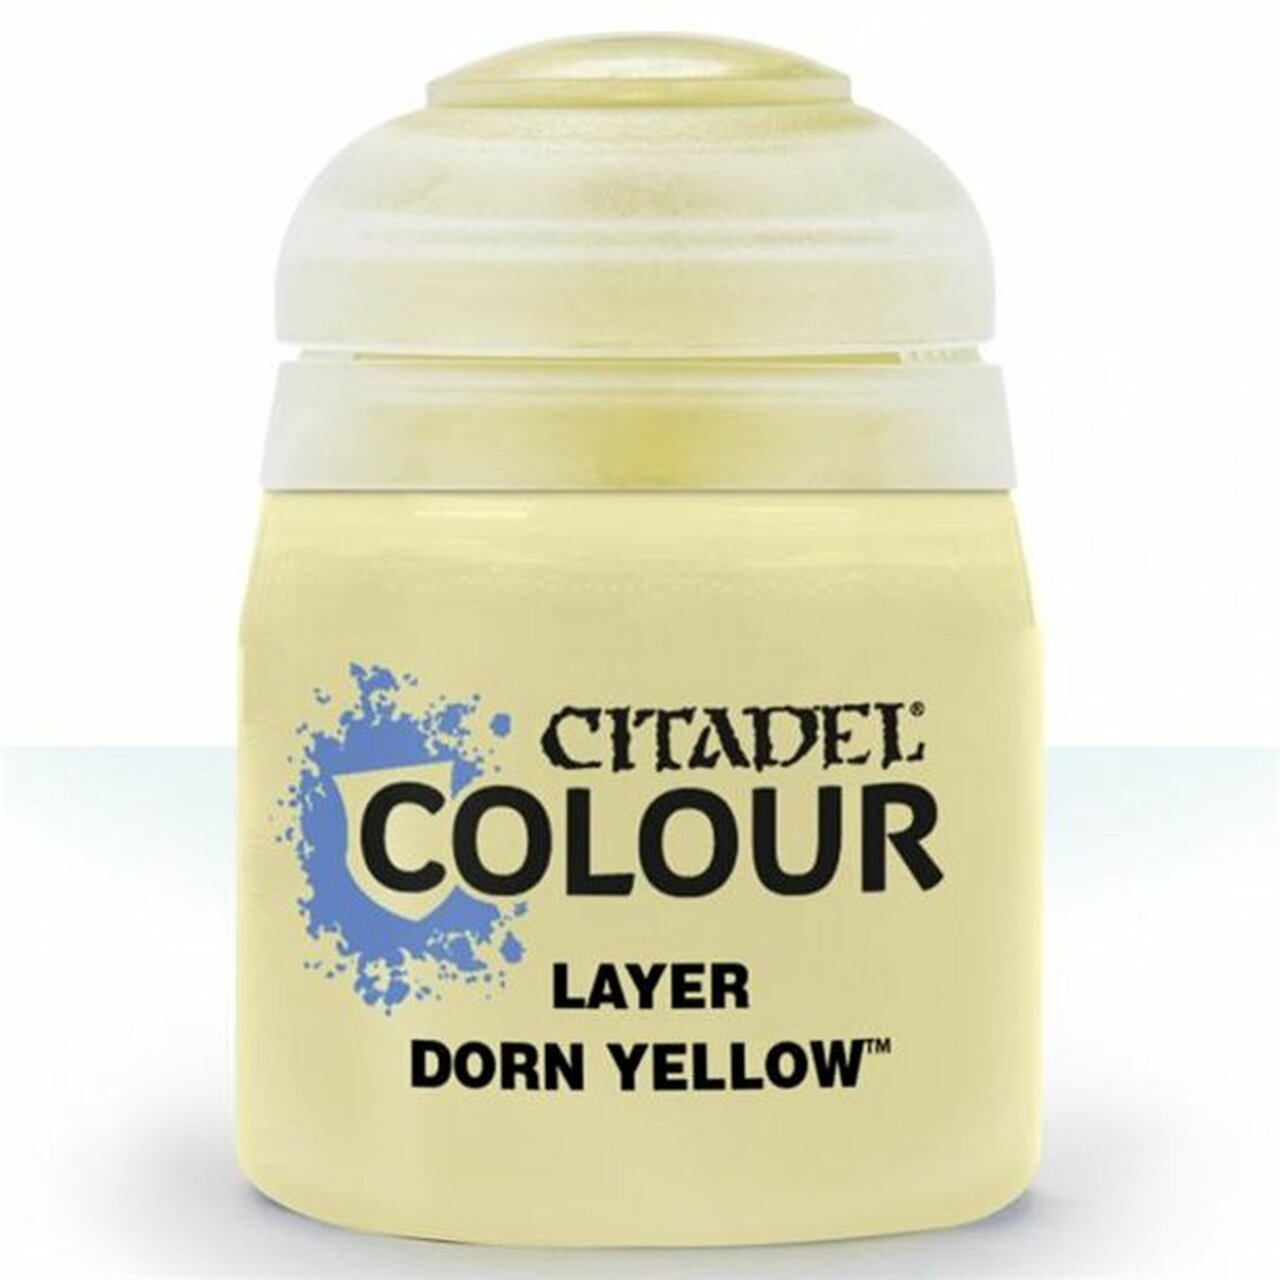 Layer Dorn Yellow